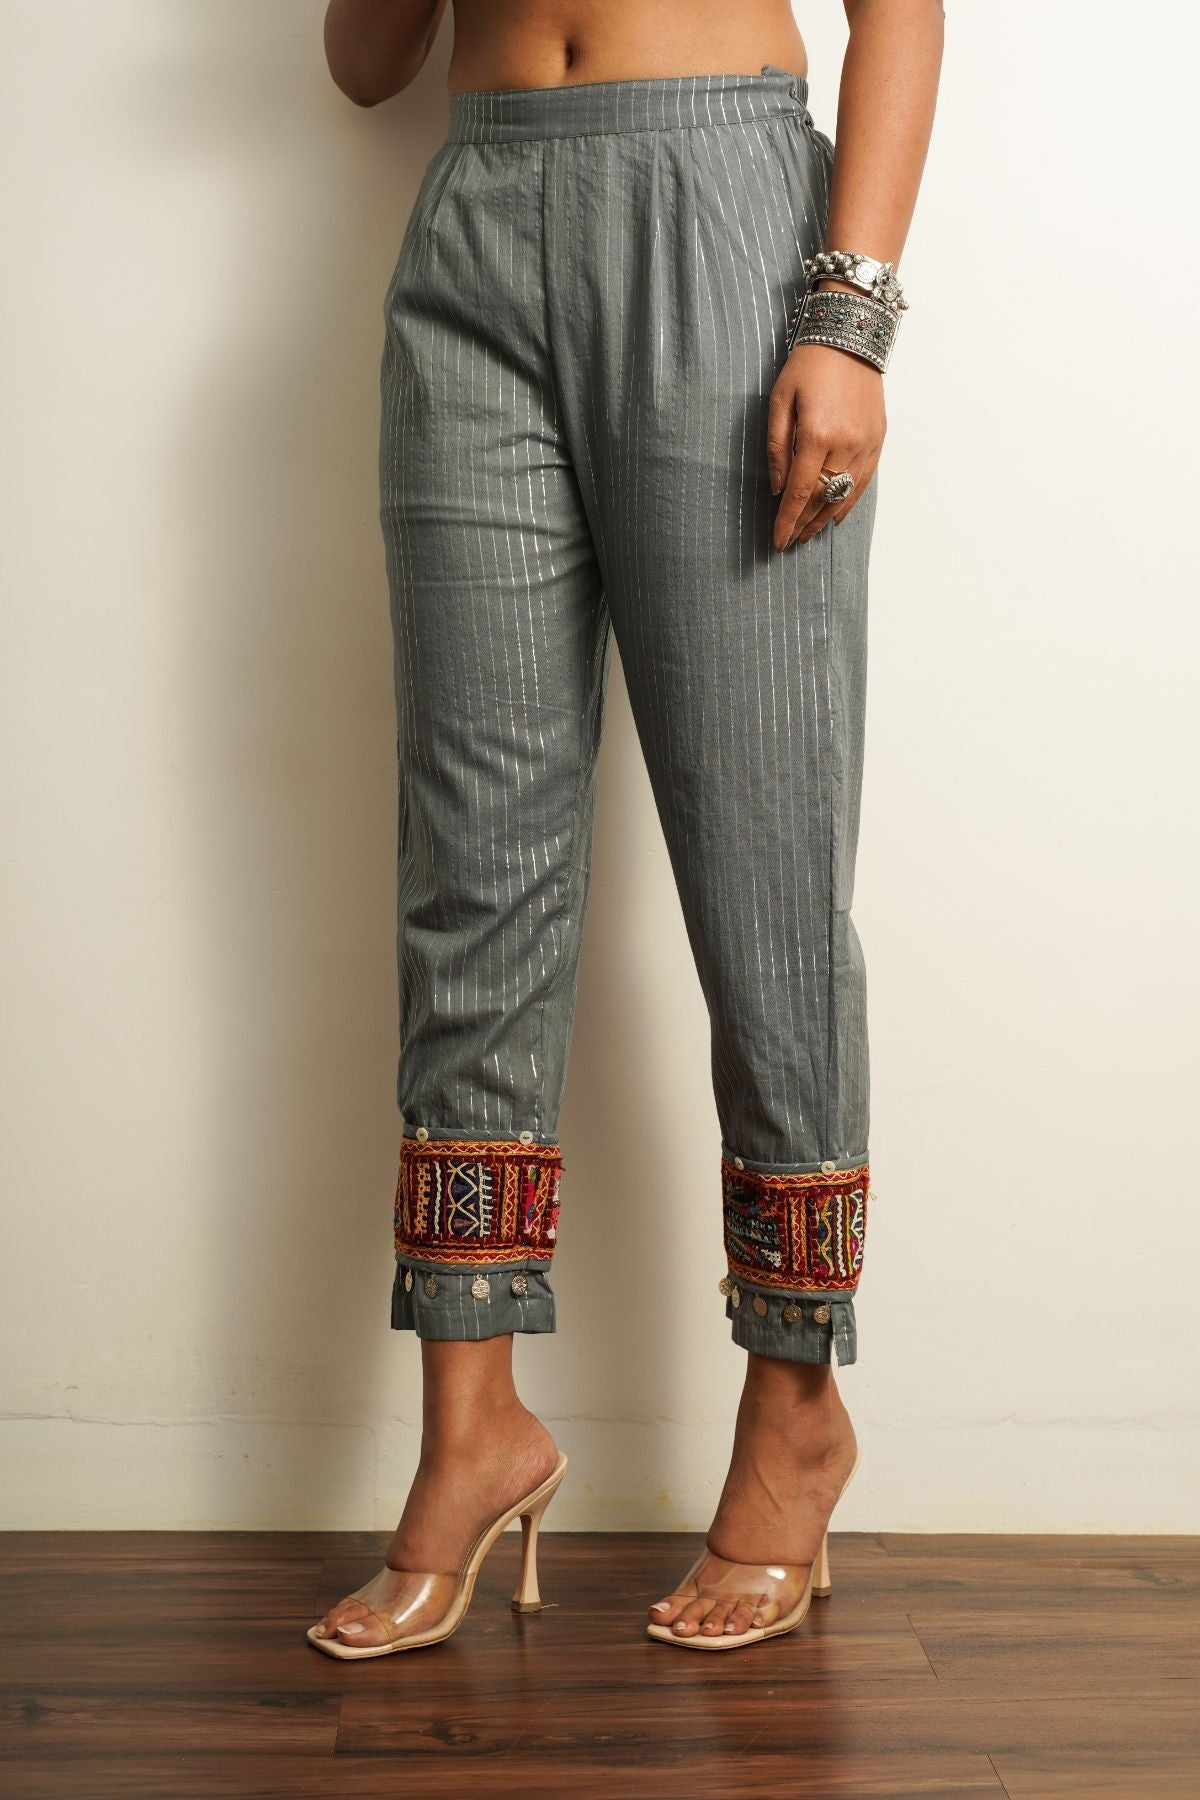 Trouser #Poncha Design | 2020 New Trouser Design | Latest #Pintex #Pintucks Trouser  Design | Fashio | Pants women fashion, Kurta designs, Stylish dress designs